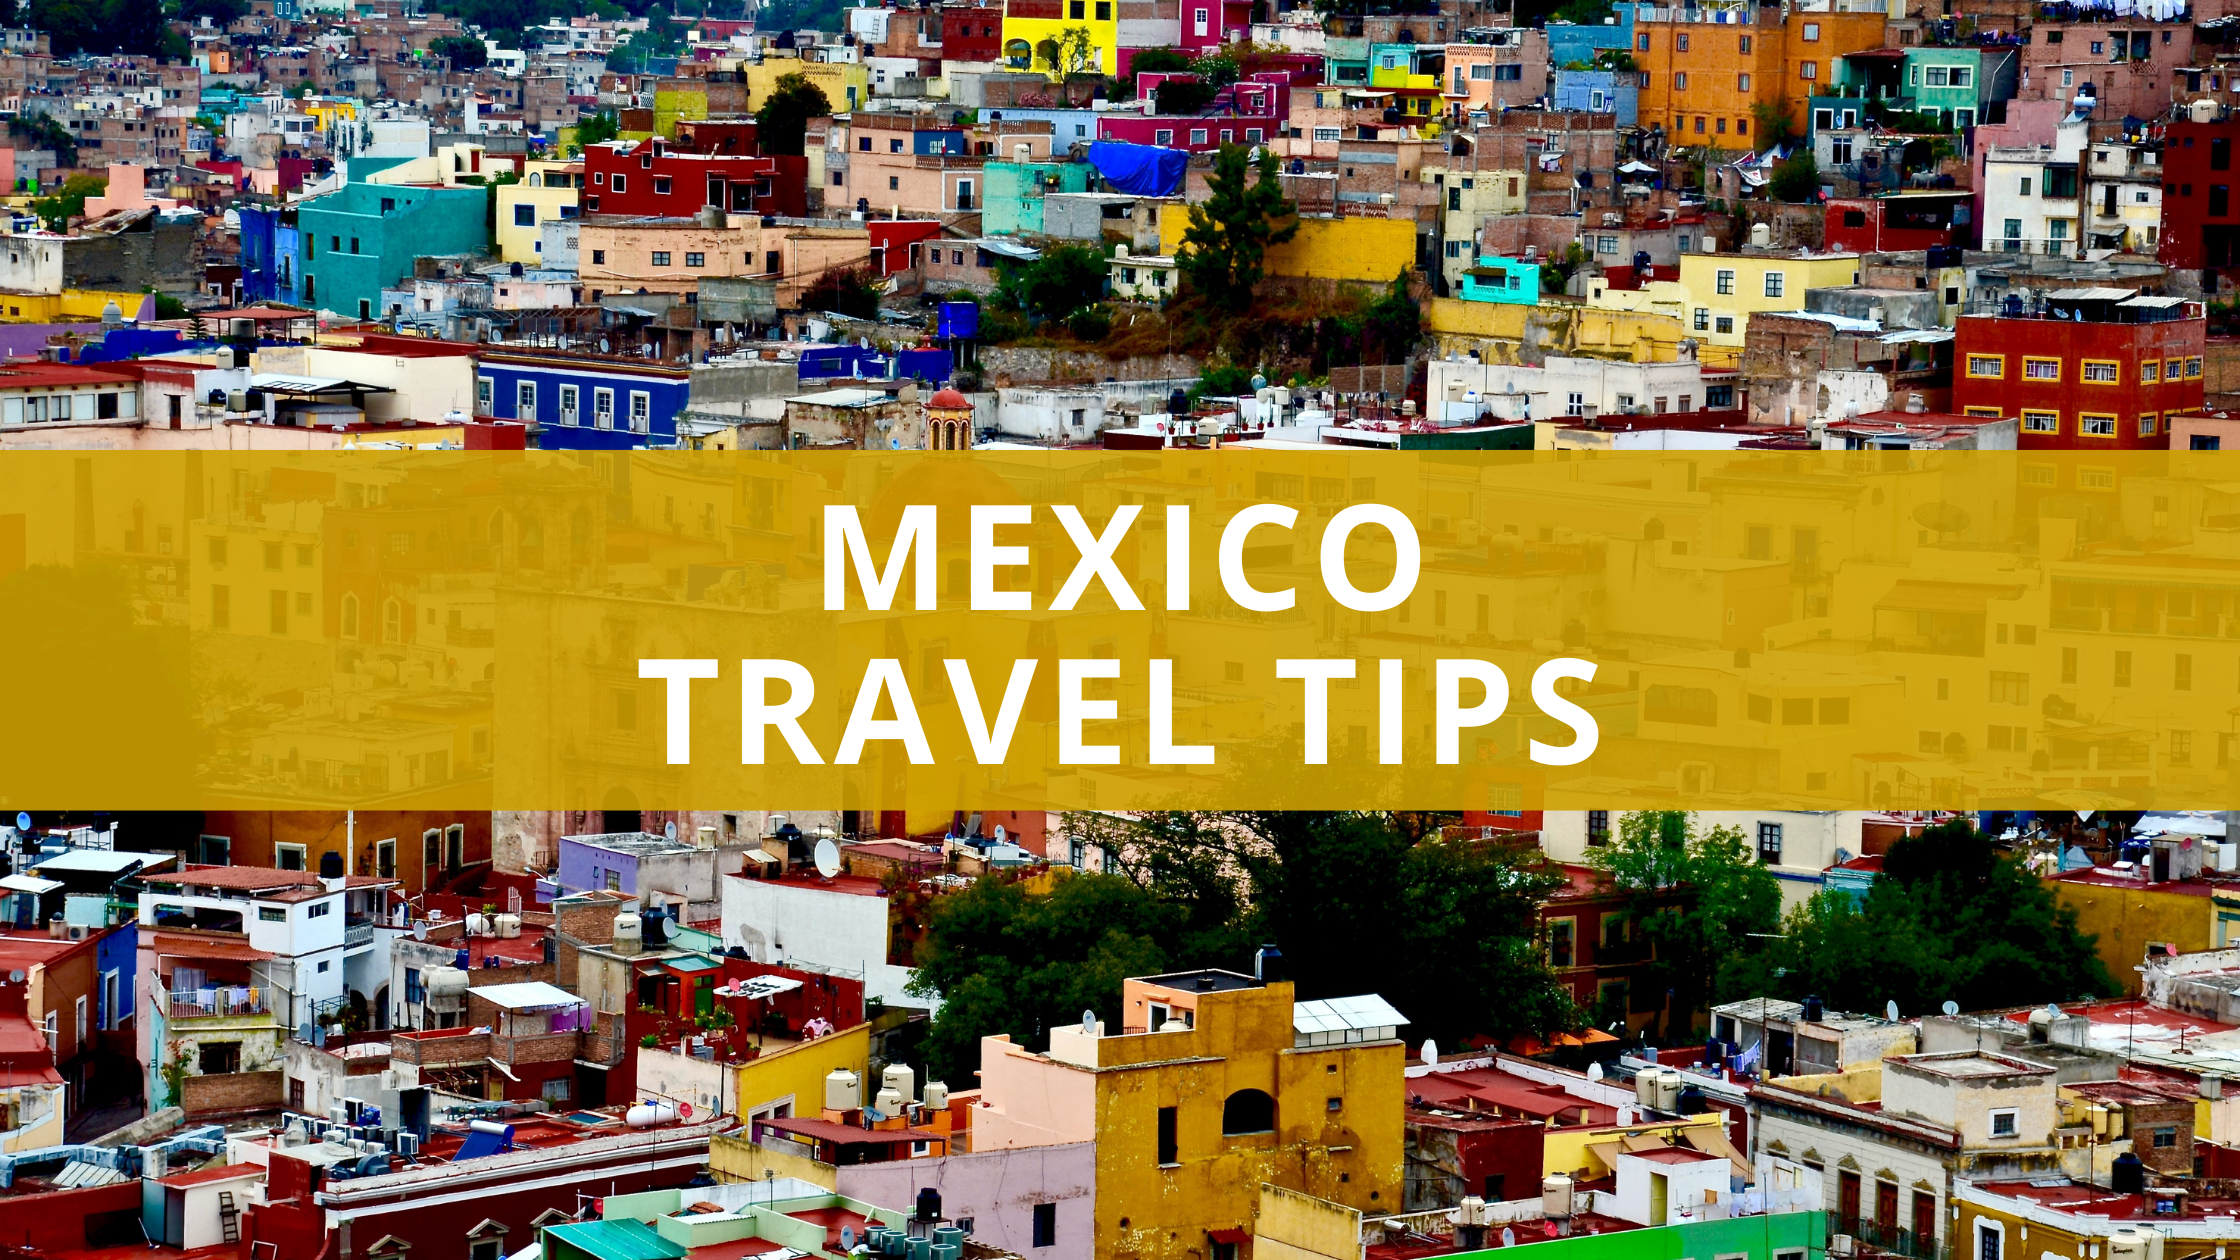 Mexico Travel Tips